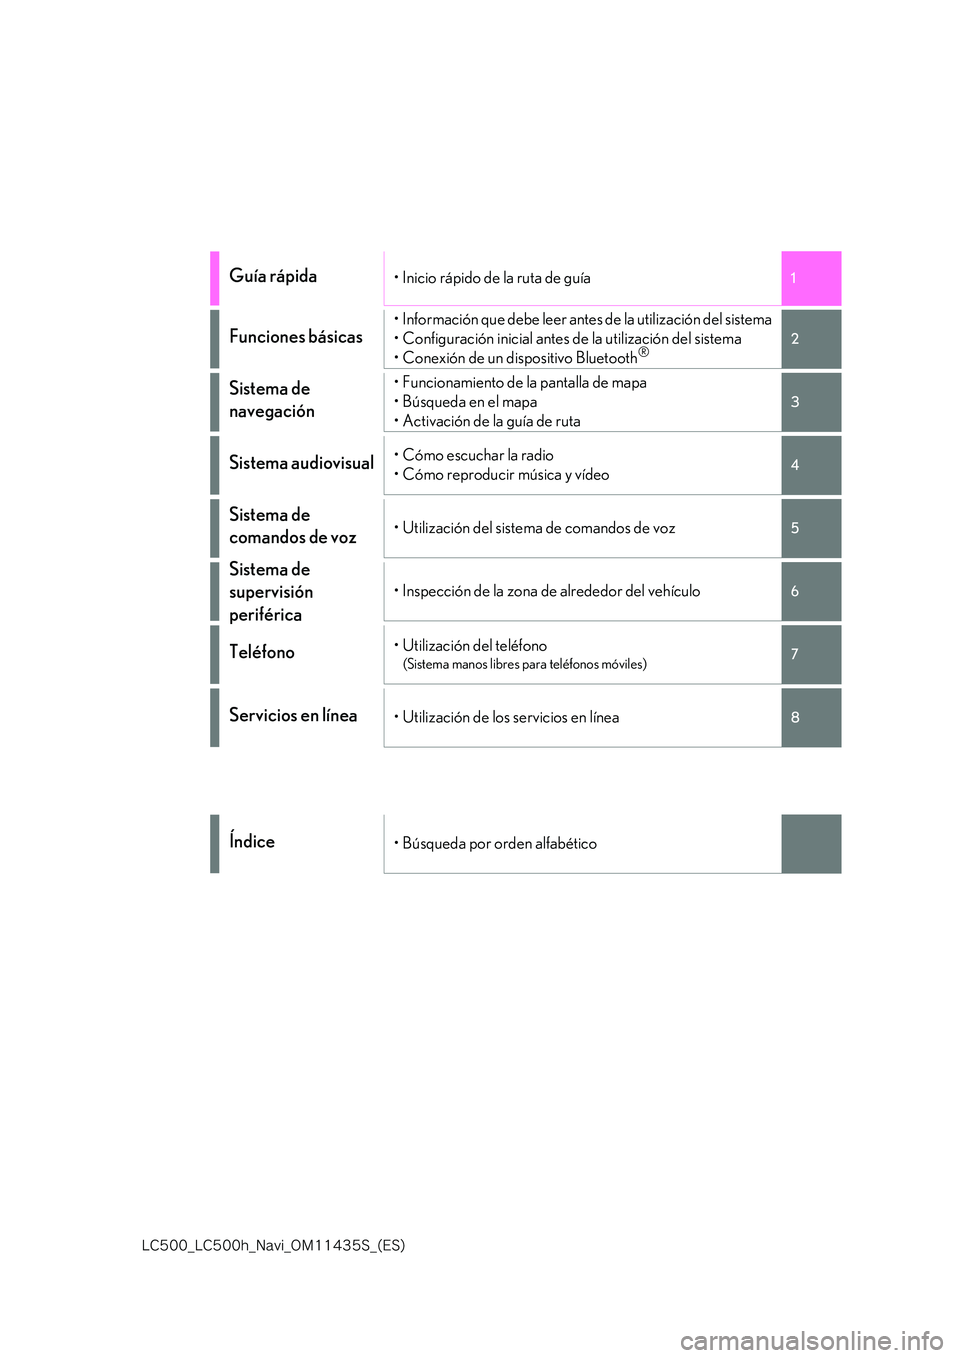 lexus LC500 2018  Manual de navegación (in Spanish) �-�$����@�-�$����I�@�/�B�W�J�@�0�.������4�@�	�&�4�

1 
7 
6
5
4
3
2
8
Guía rápida• Inicio rápido de la ruta de guía
Funciones básicas
• Información que debe leer antes de la utili